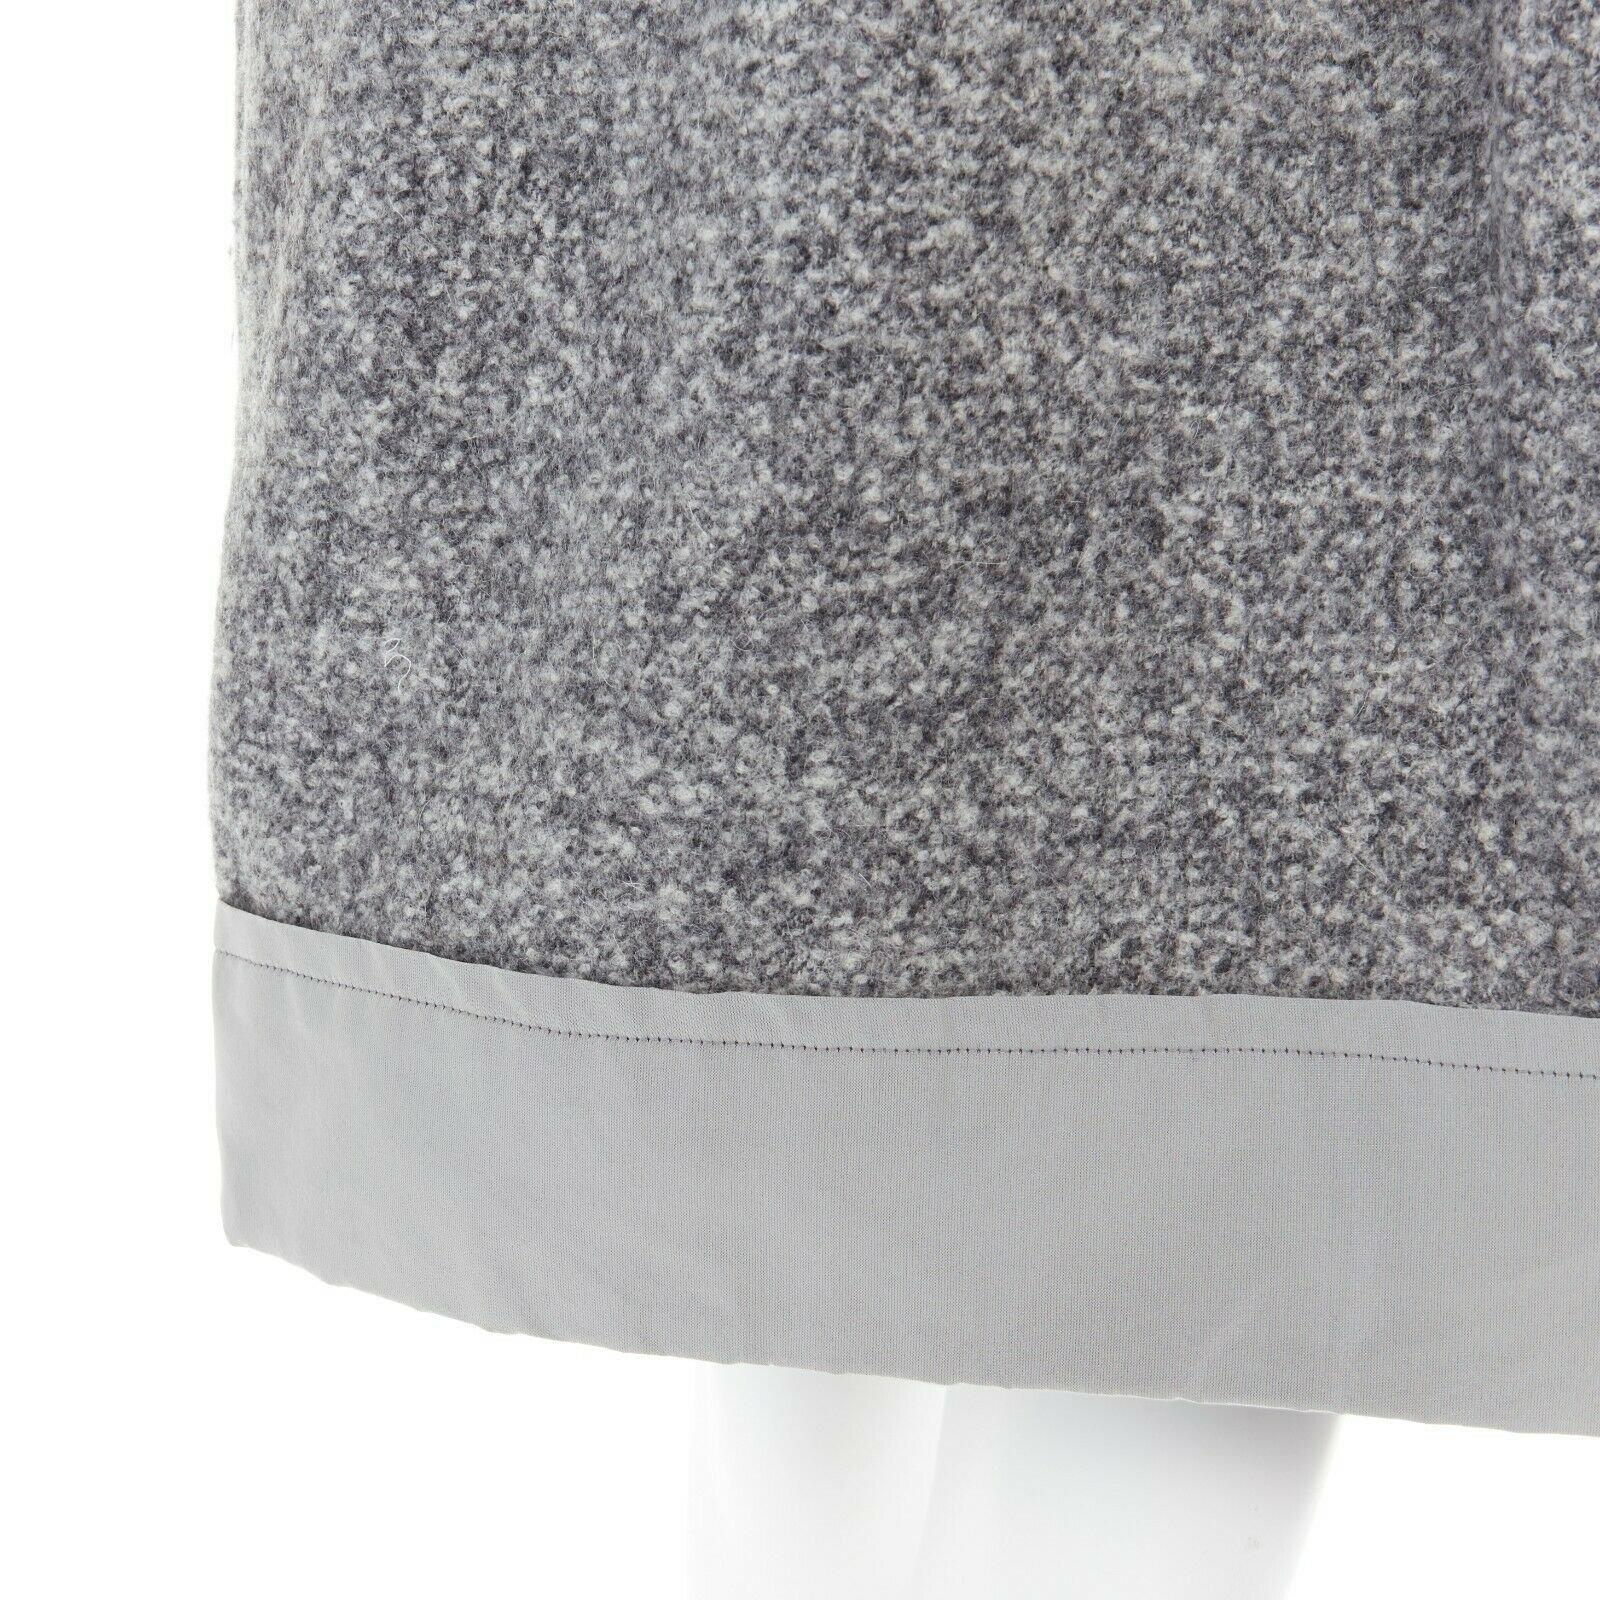 MAX MARA grey polyamide speckle wool skirt sleeveless work dress US8 FR40 M For Sale 2